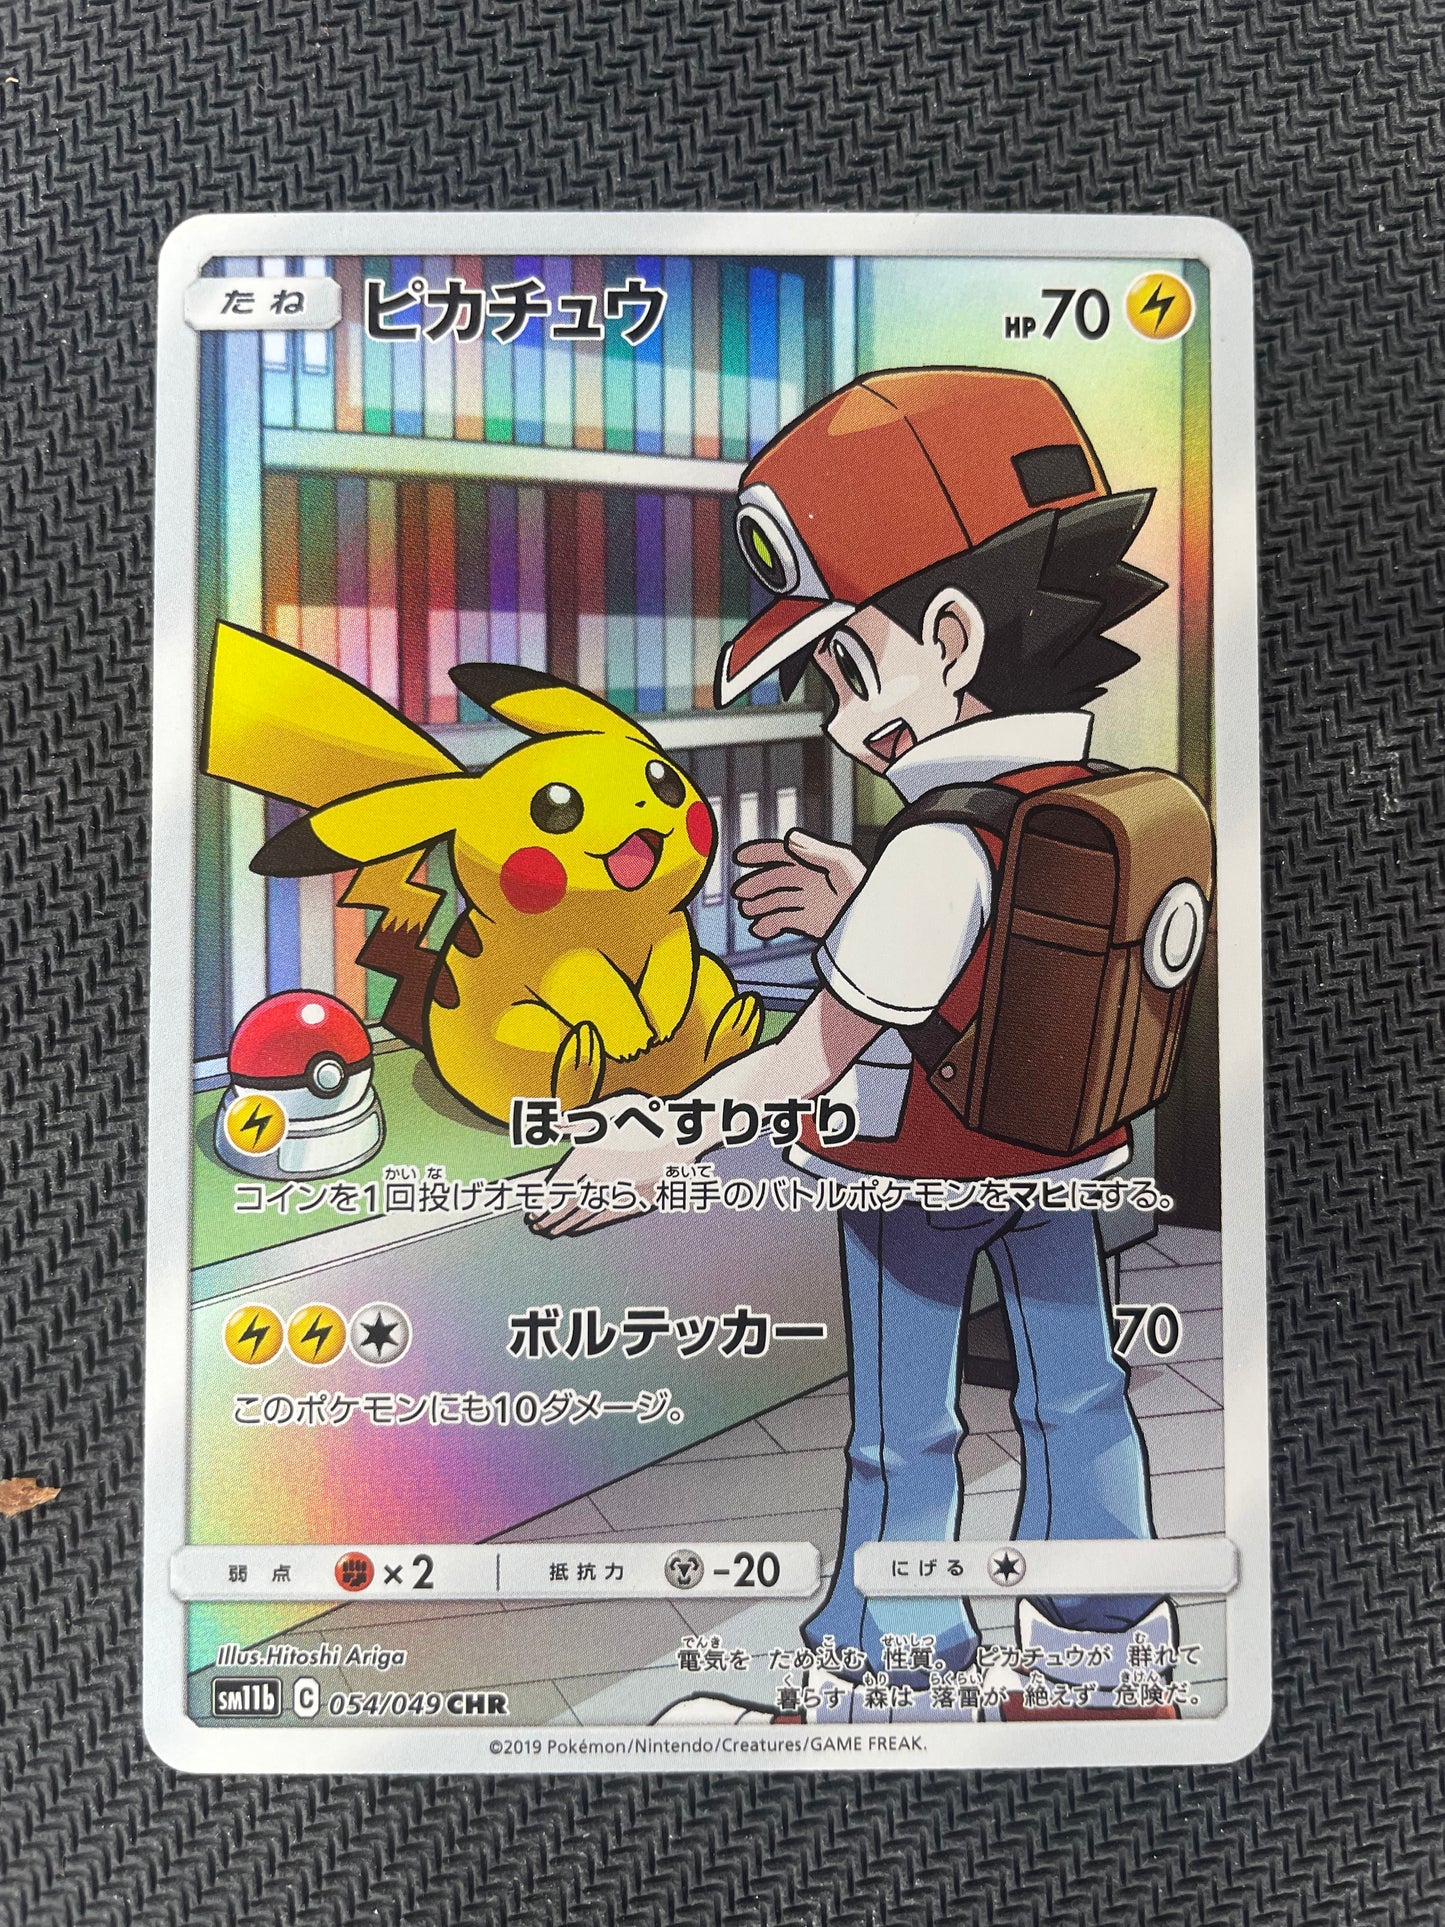 2019 Pokemon SM Dream League 054/049 Red’s Pikachu CHR Trainer